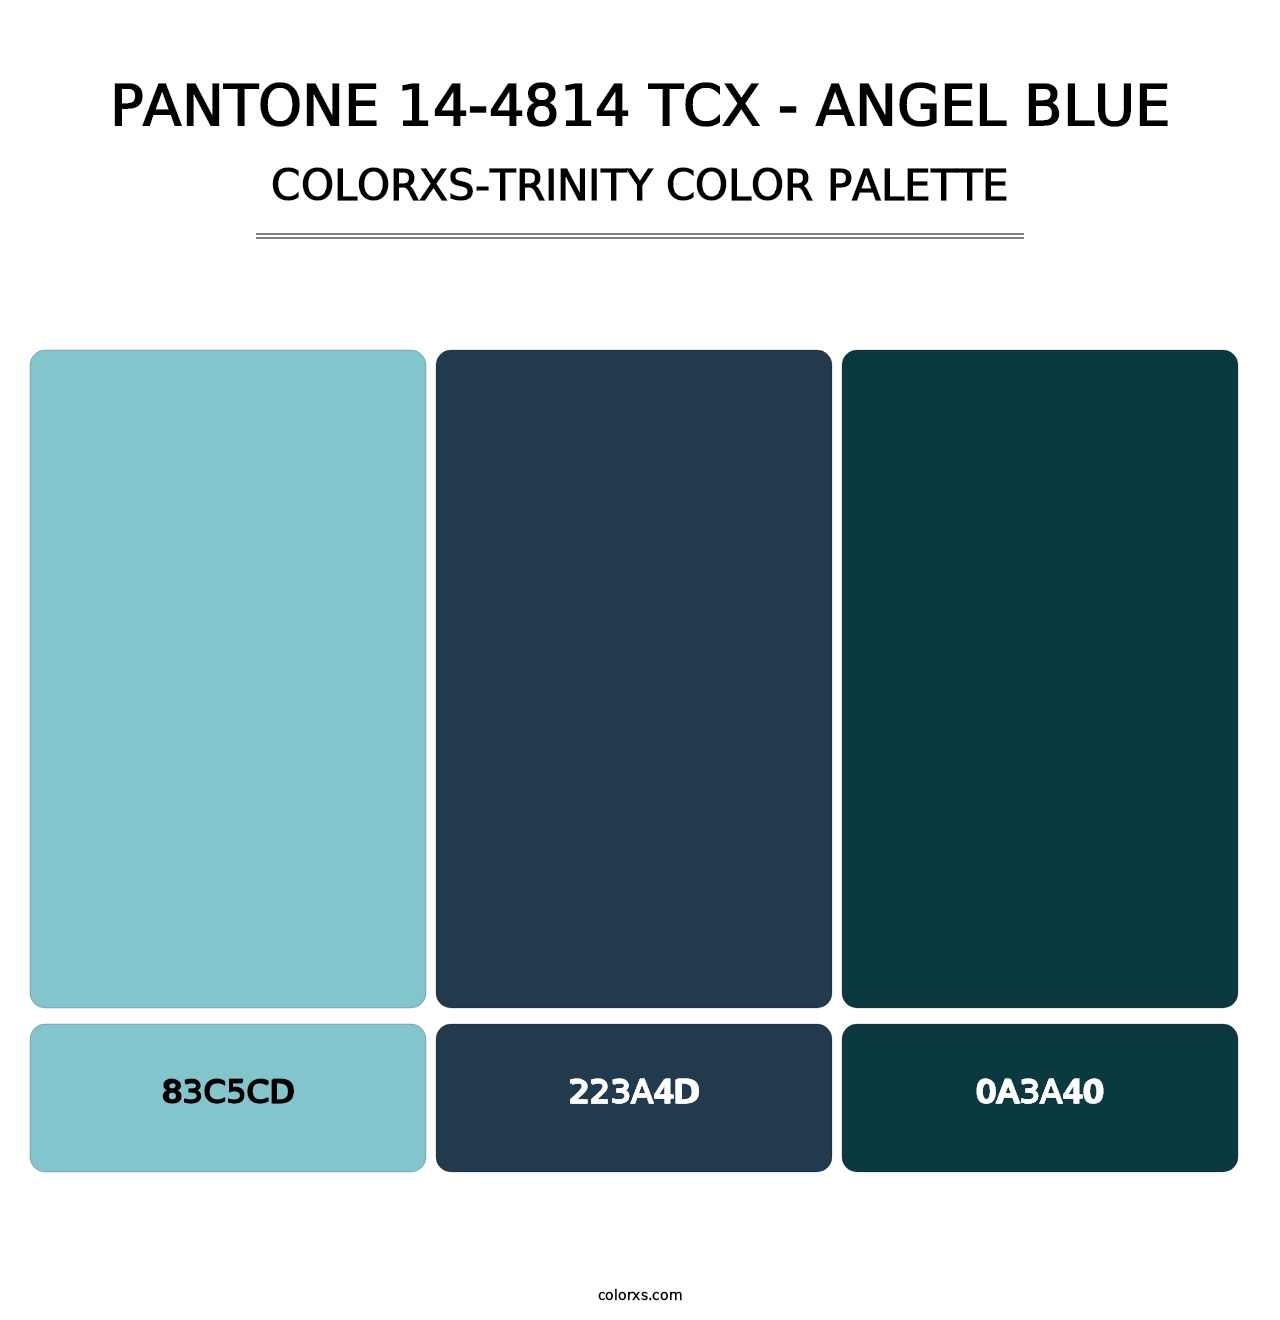 PANTONE 14-4814 TCX - Angel Blue - Colorxs Trinity Palette